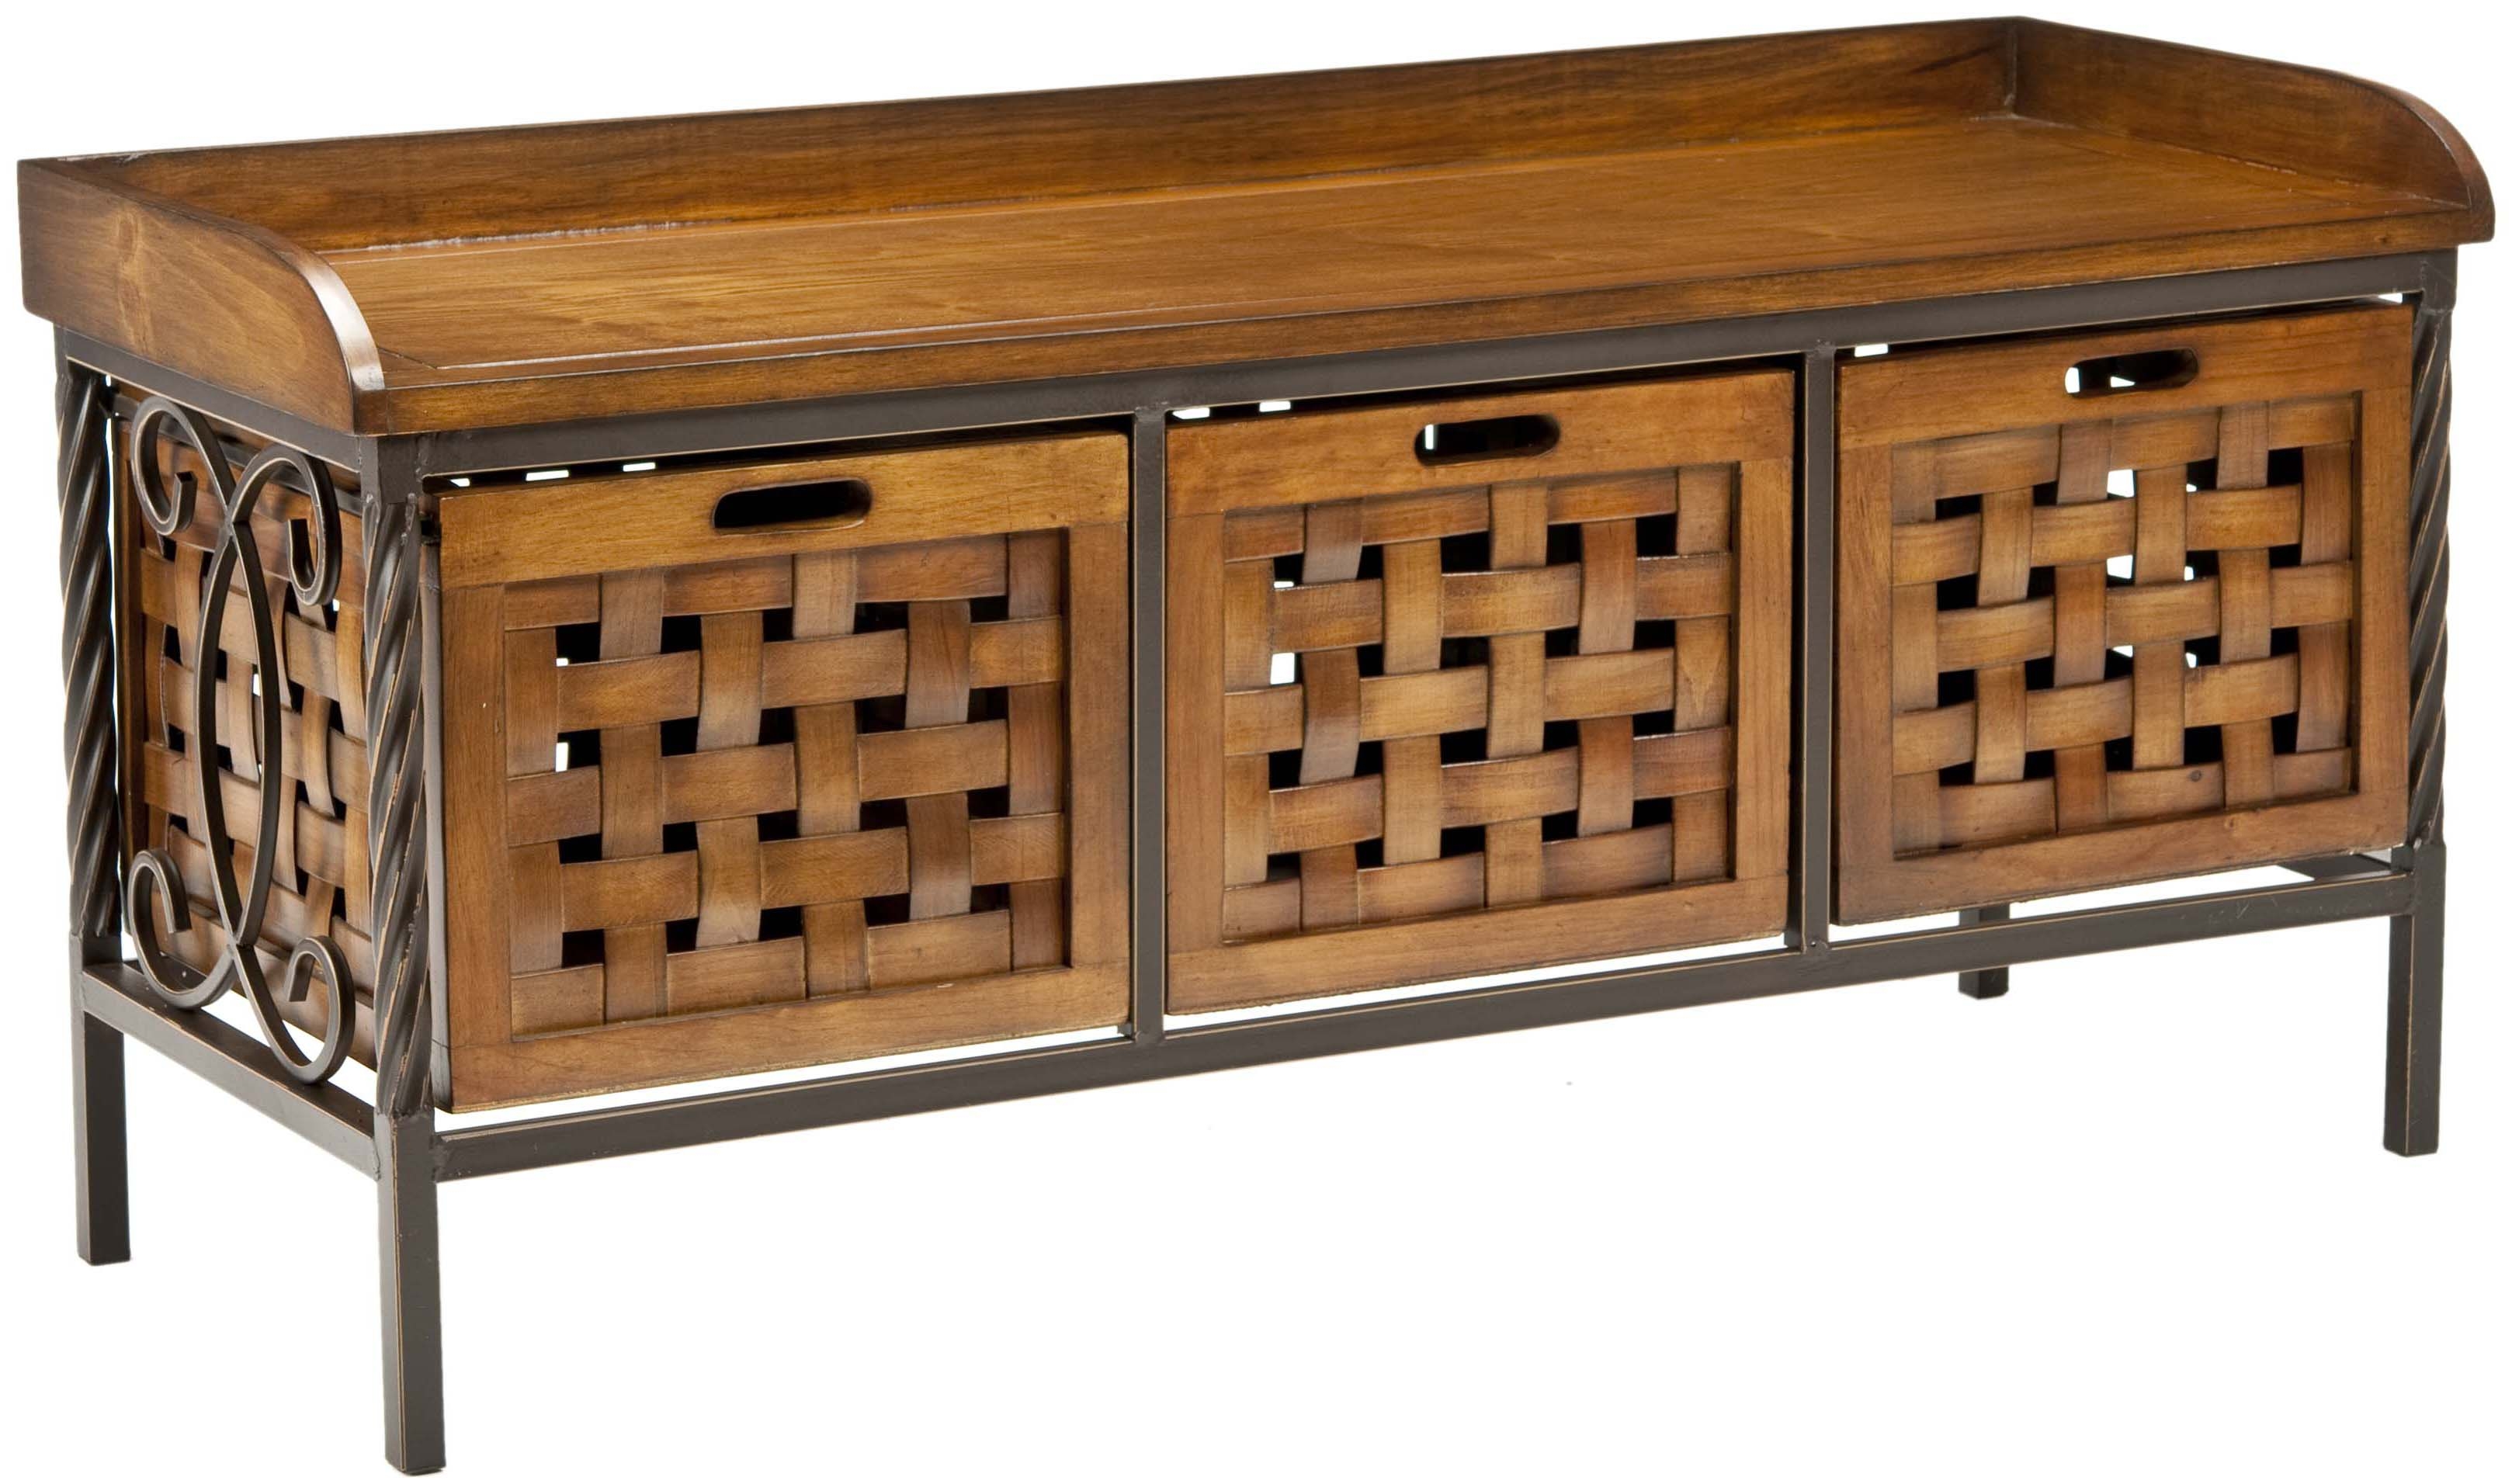 Isaac 3 Drawer Wooden Storage Bench - Filbert Brown - Arlo Home - Image 1